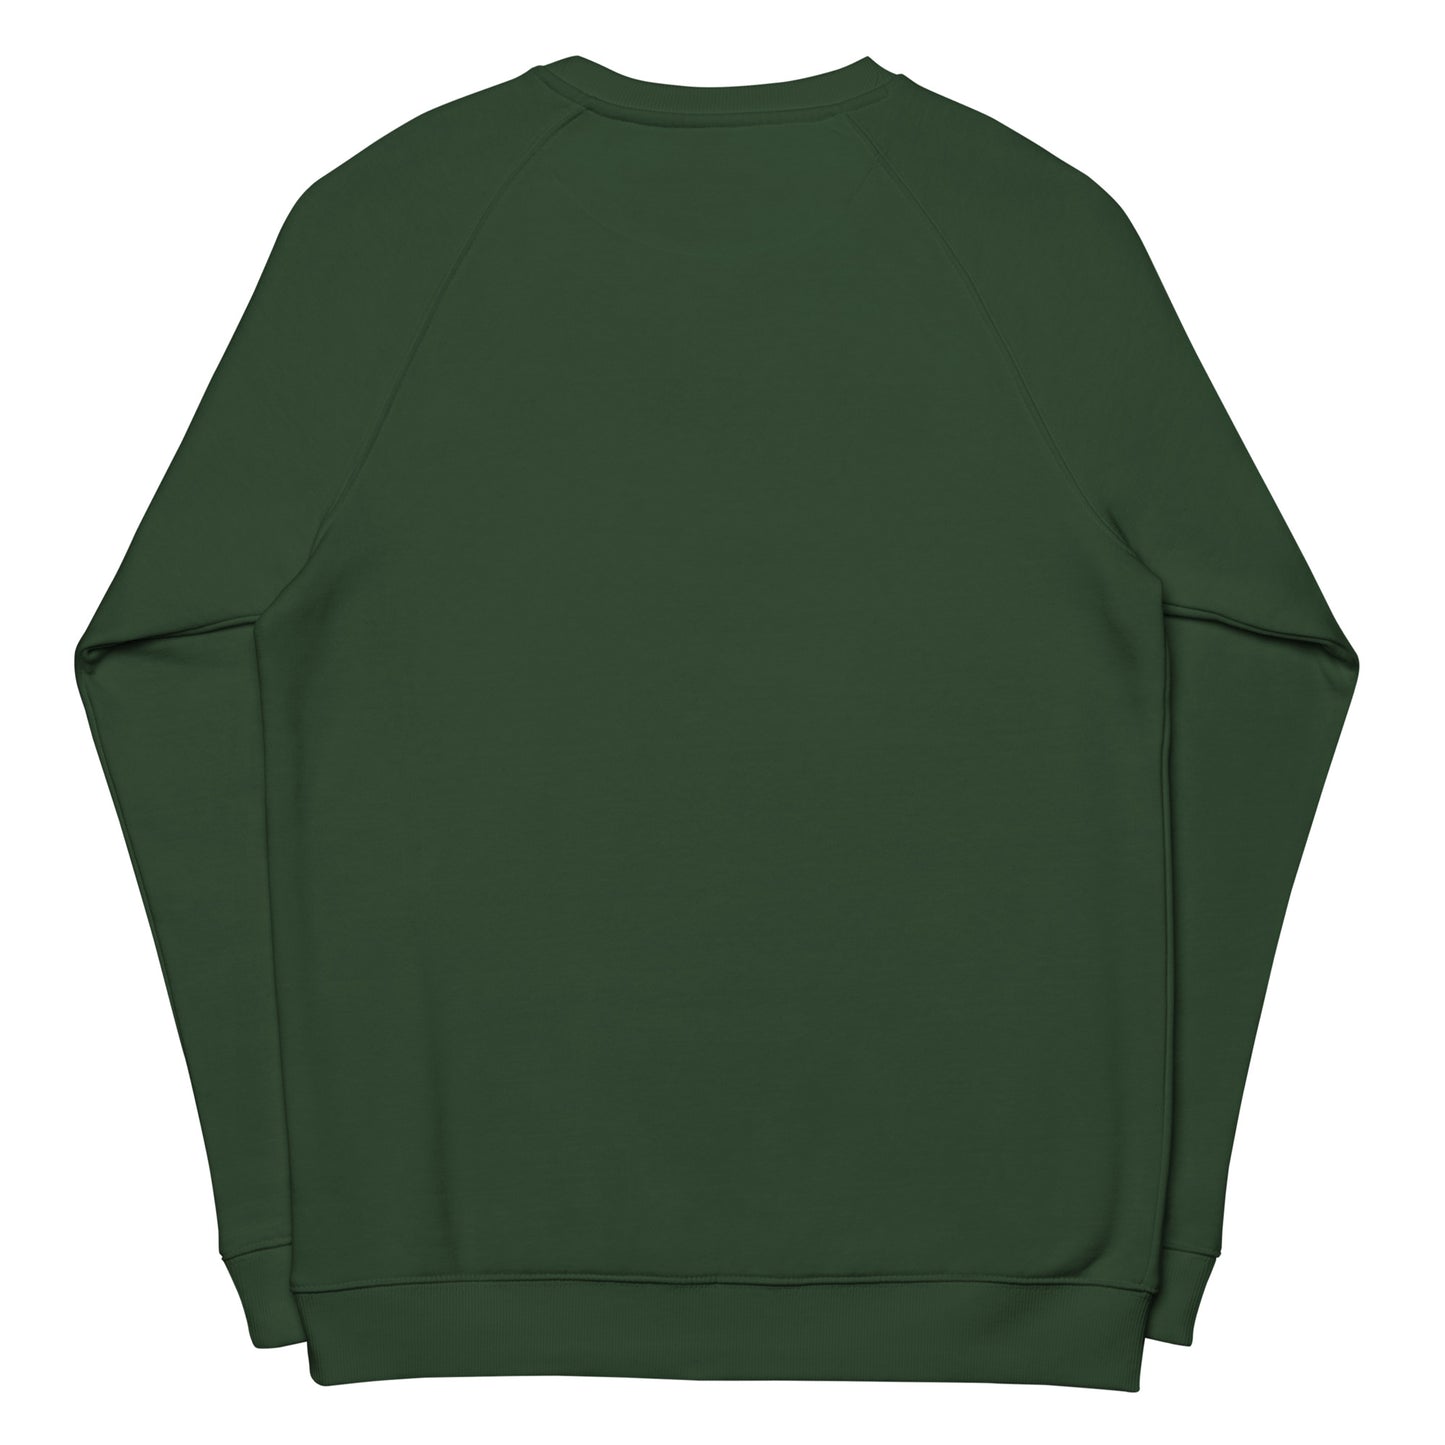 Unisex organic Glo sweatshirt (pine green)